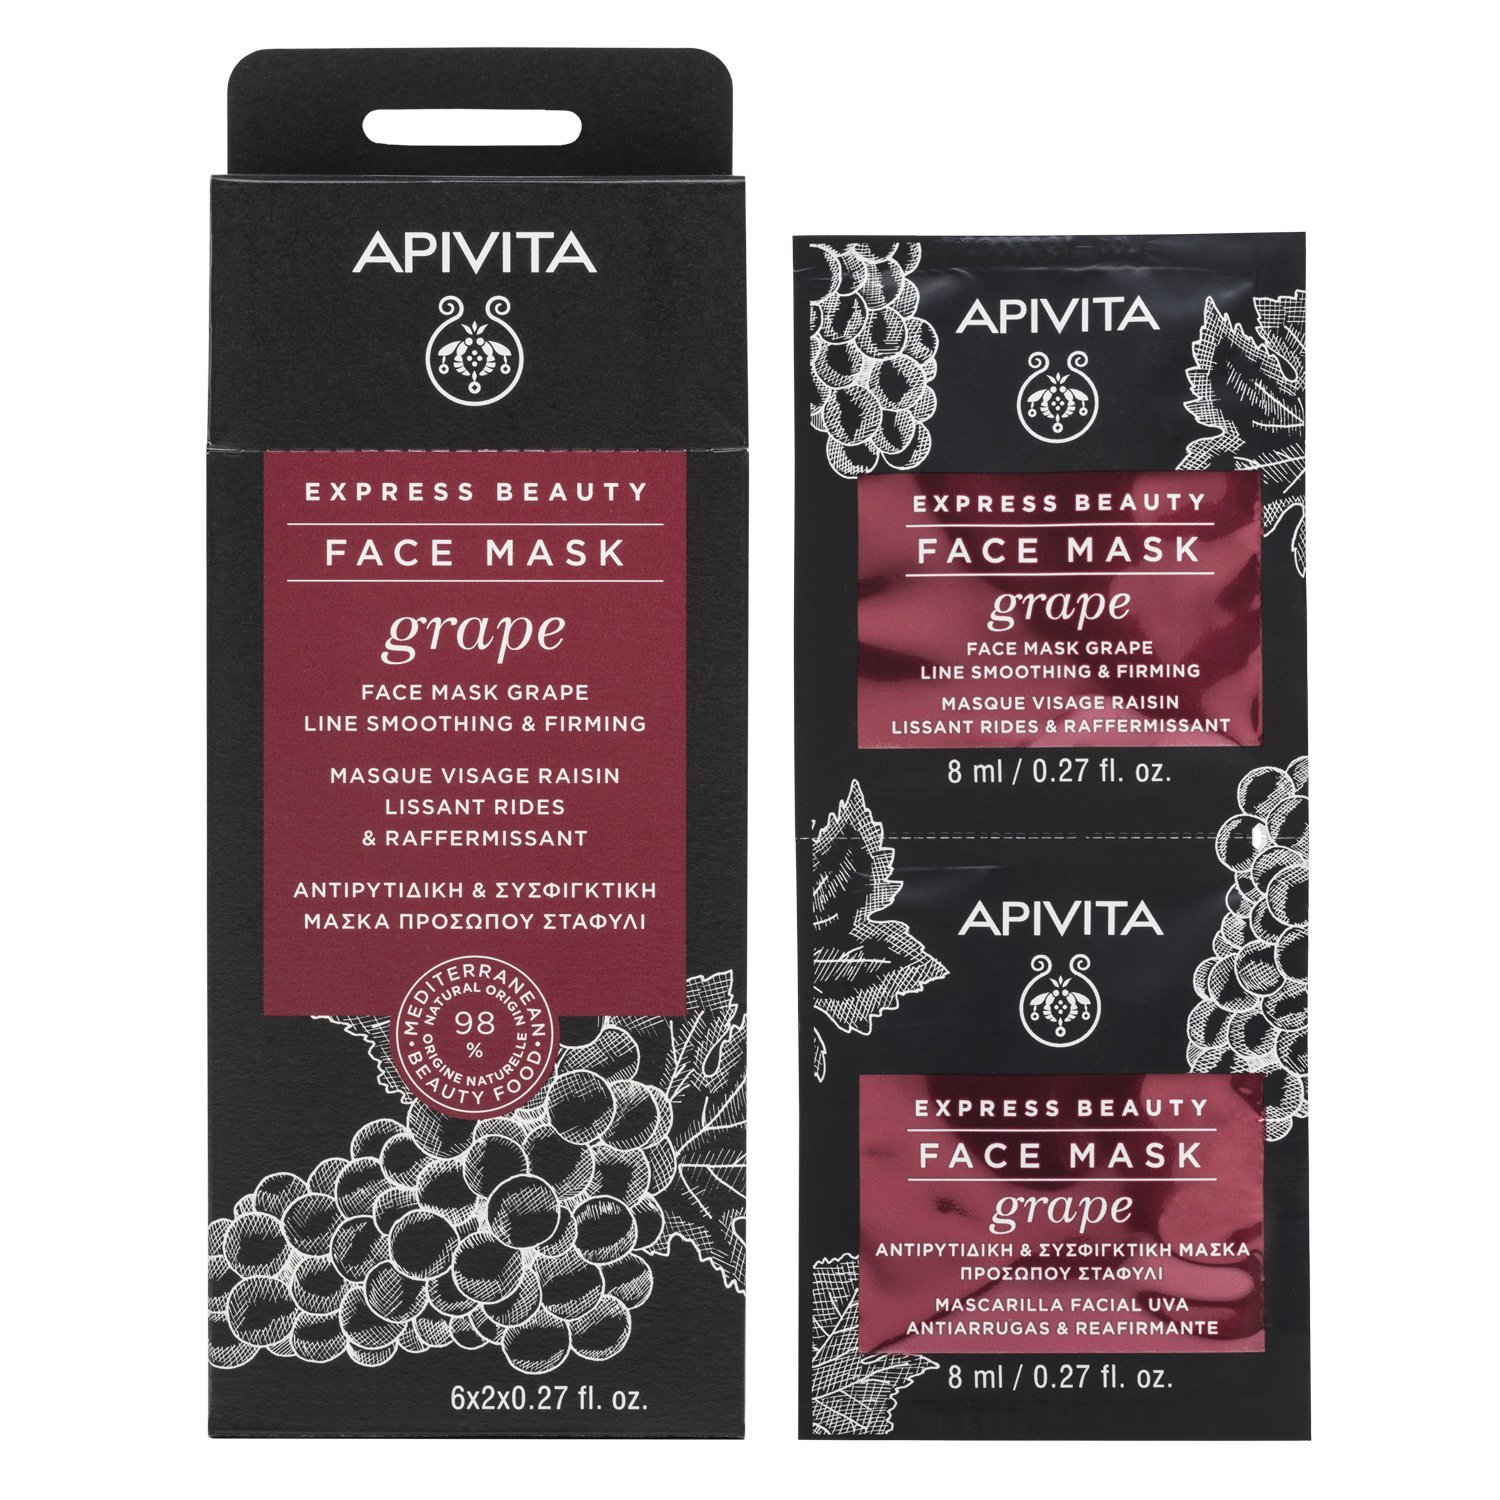 Apivita Express Beauty with Grape Αντιρυτιδική & Συσφιγκτική Μάσκα με Σταφύλι 2x8ml 